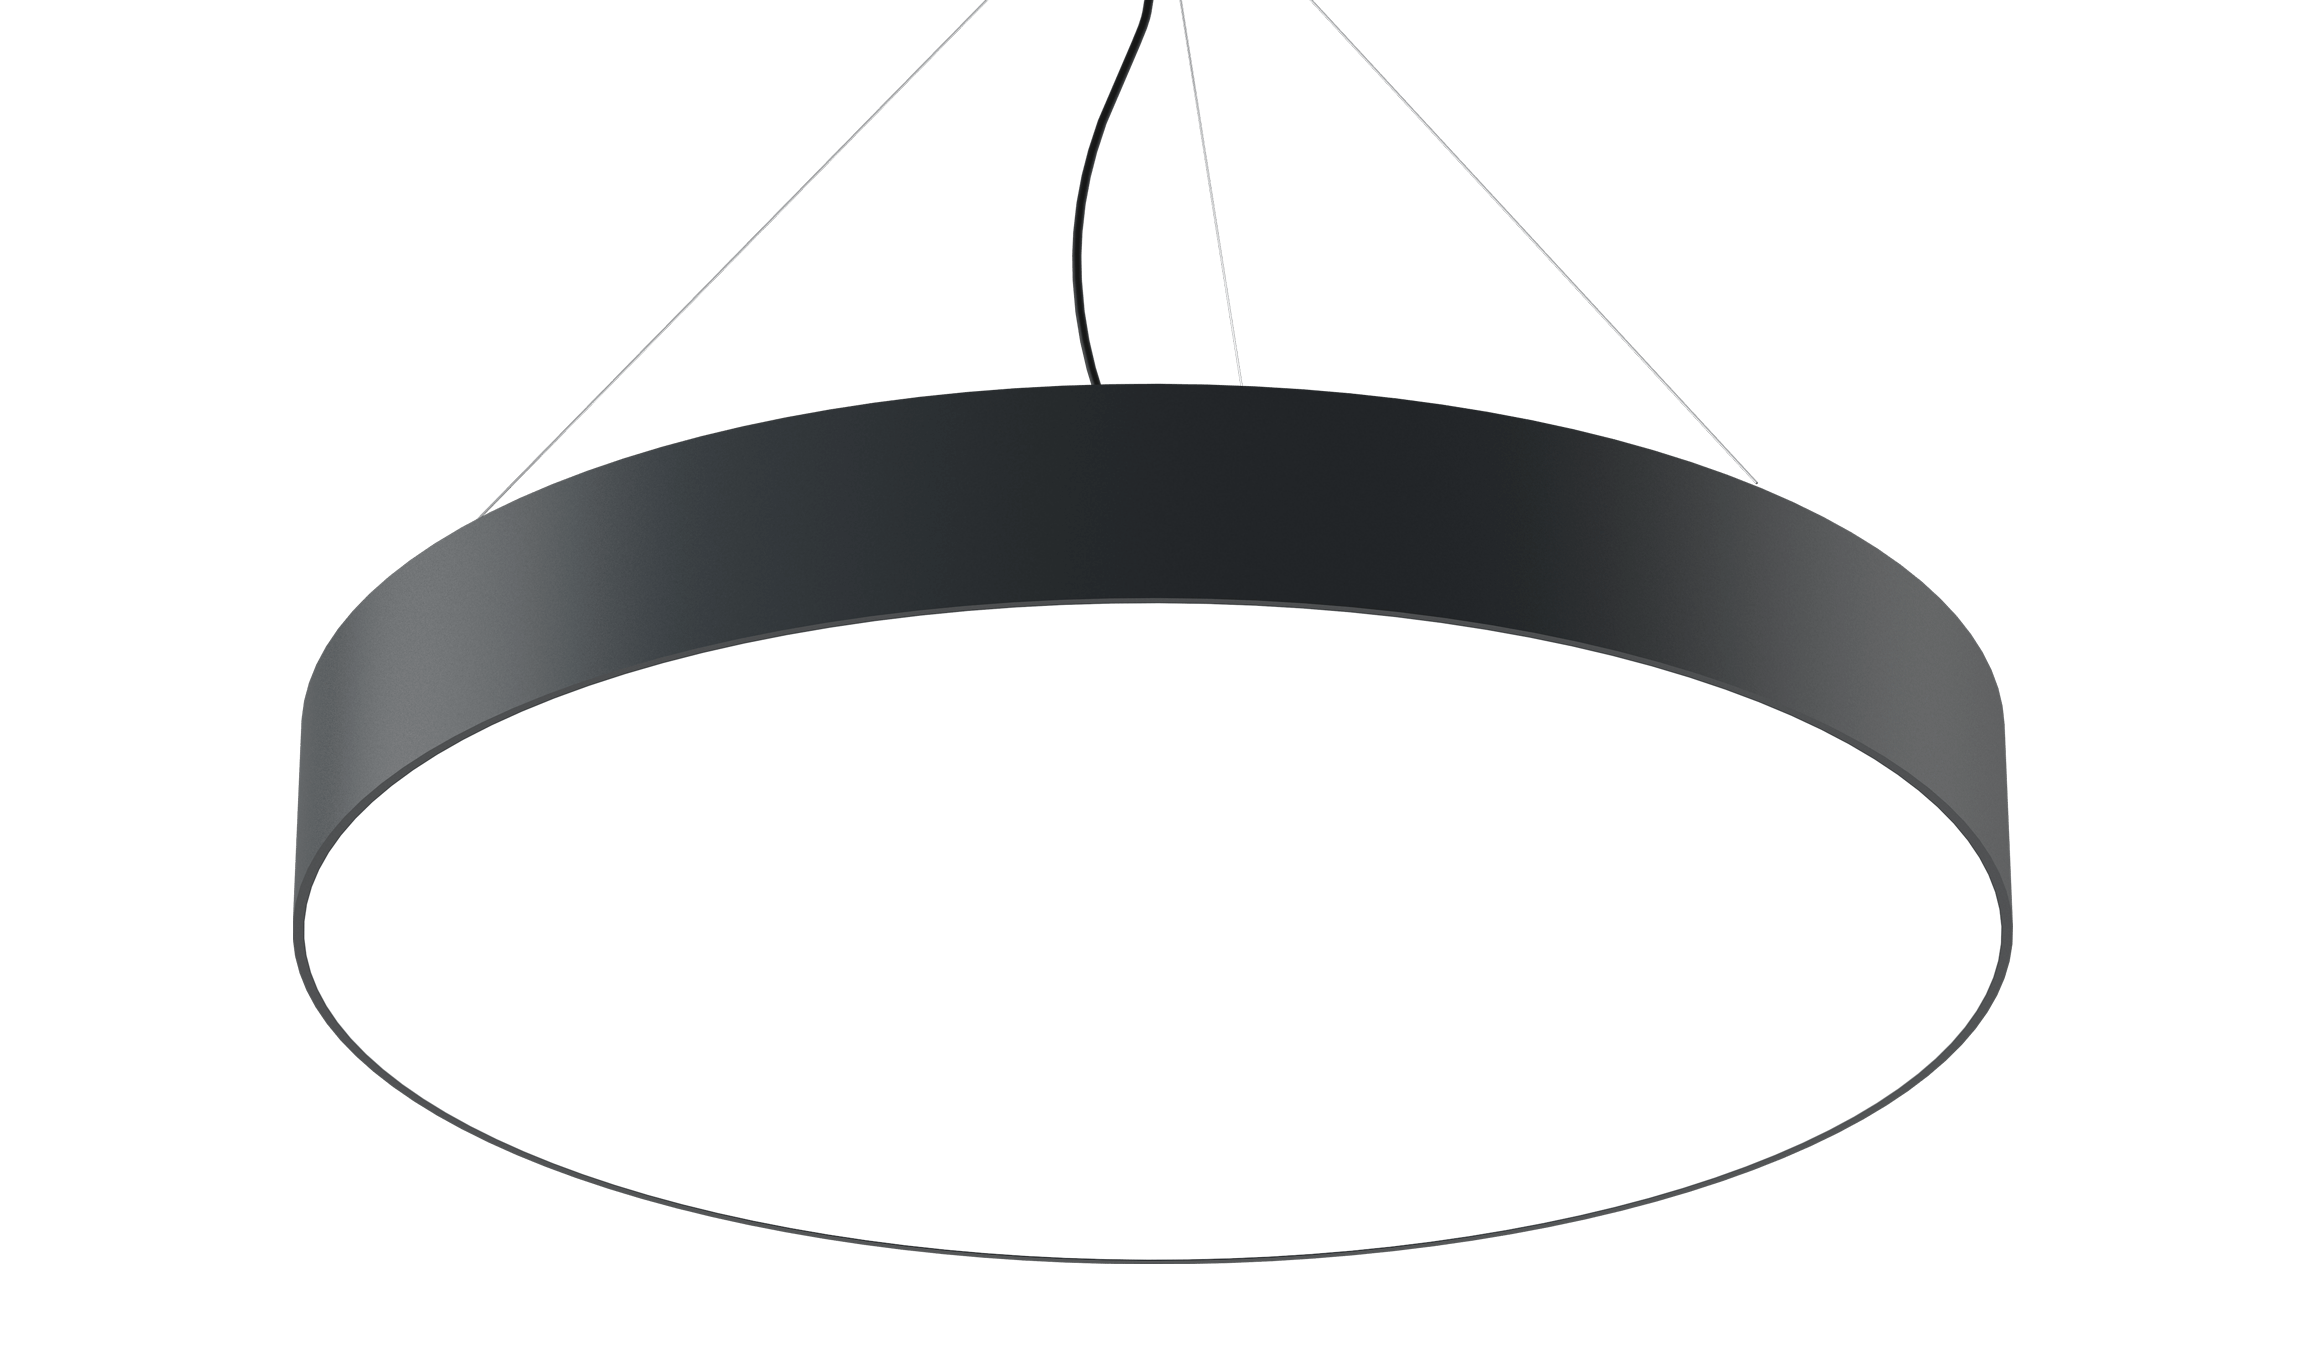 Planet - pendant lighting